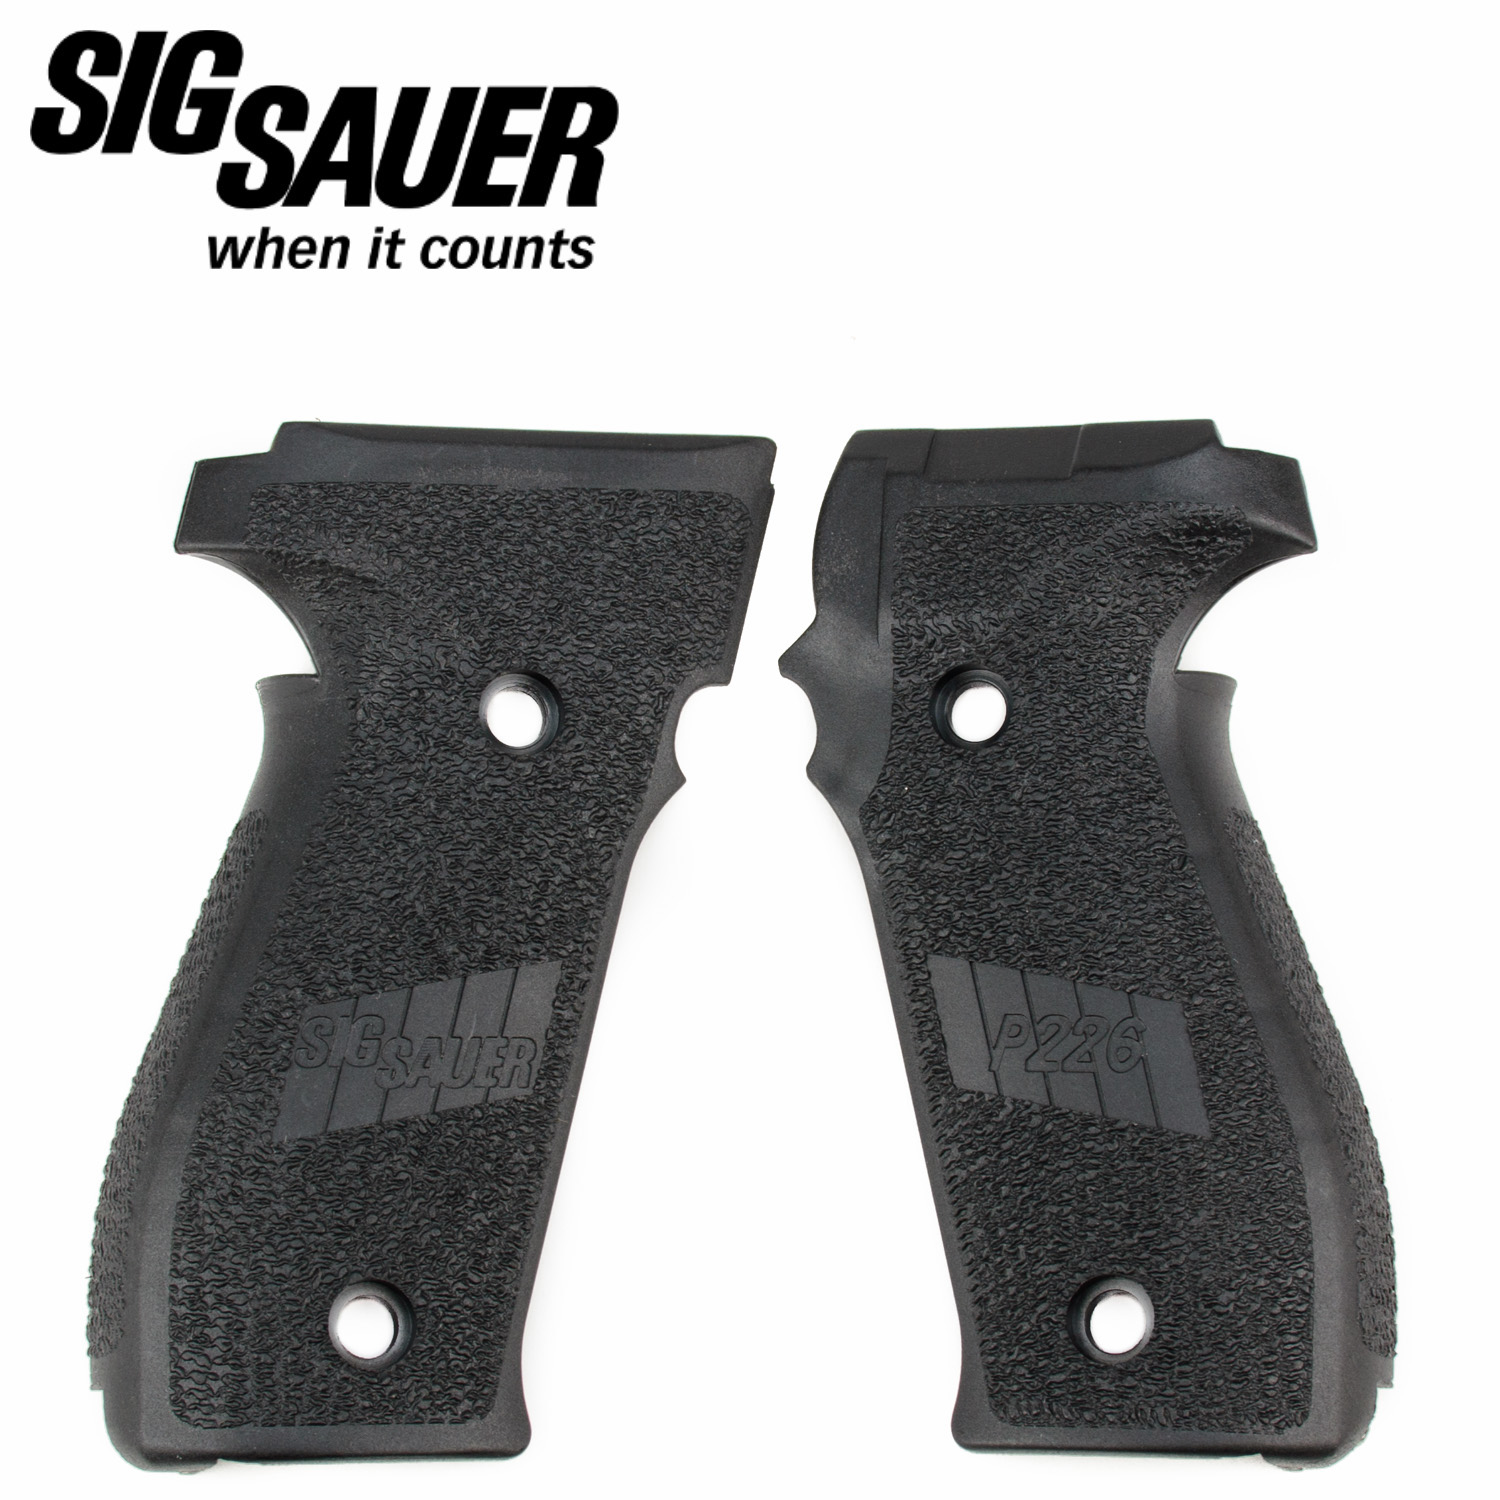 Sig Sauer P226 Black Polymer Grip Set, Standard: MGW